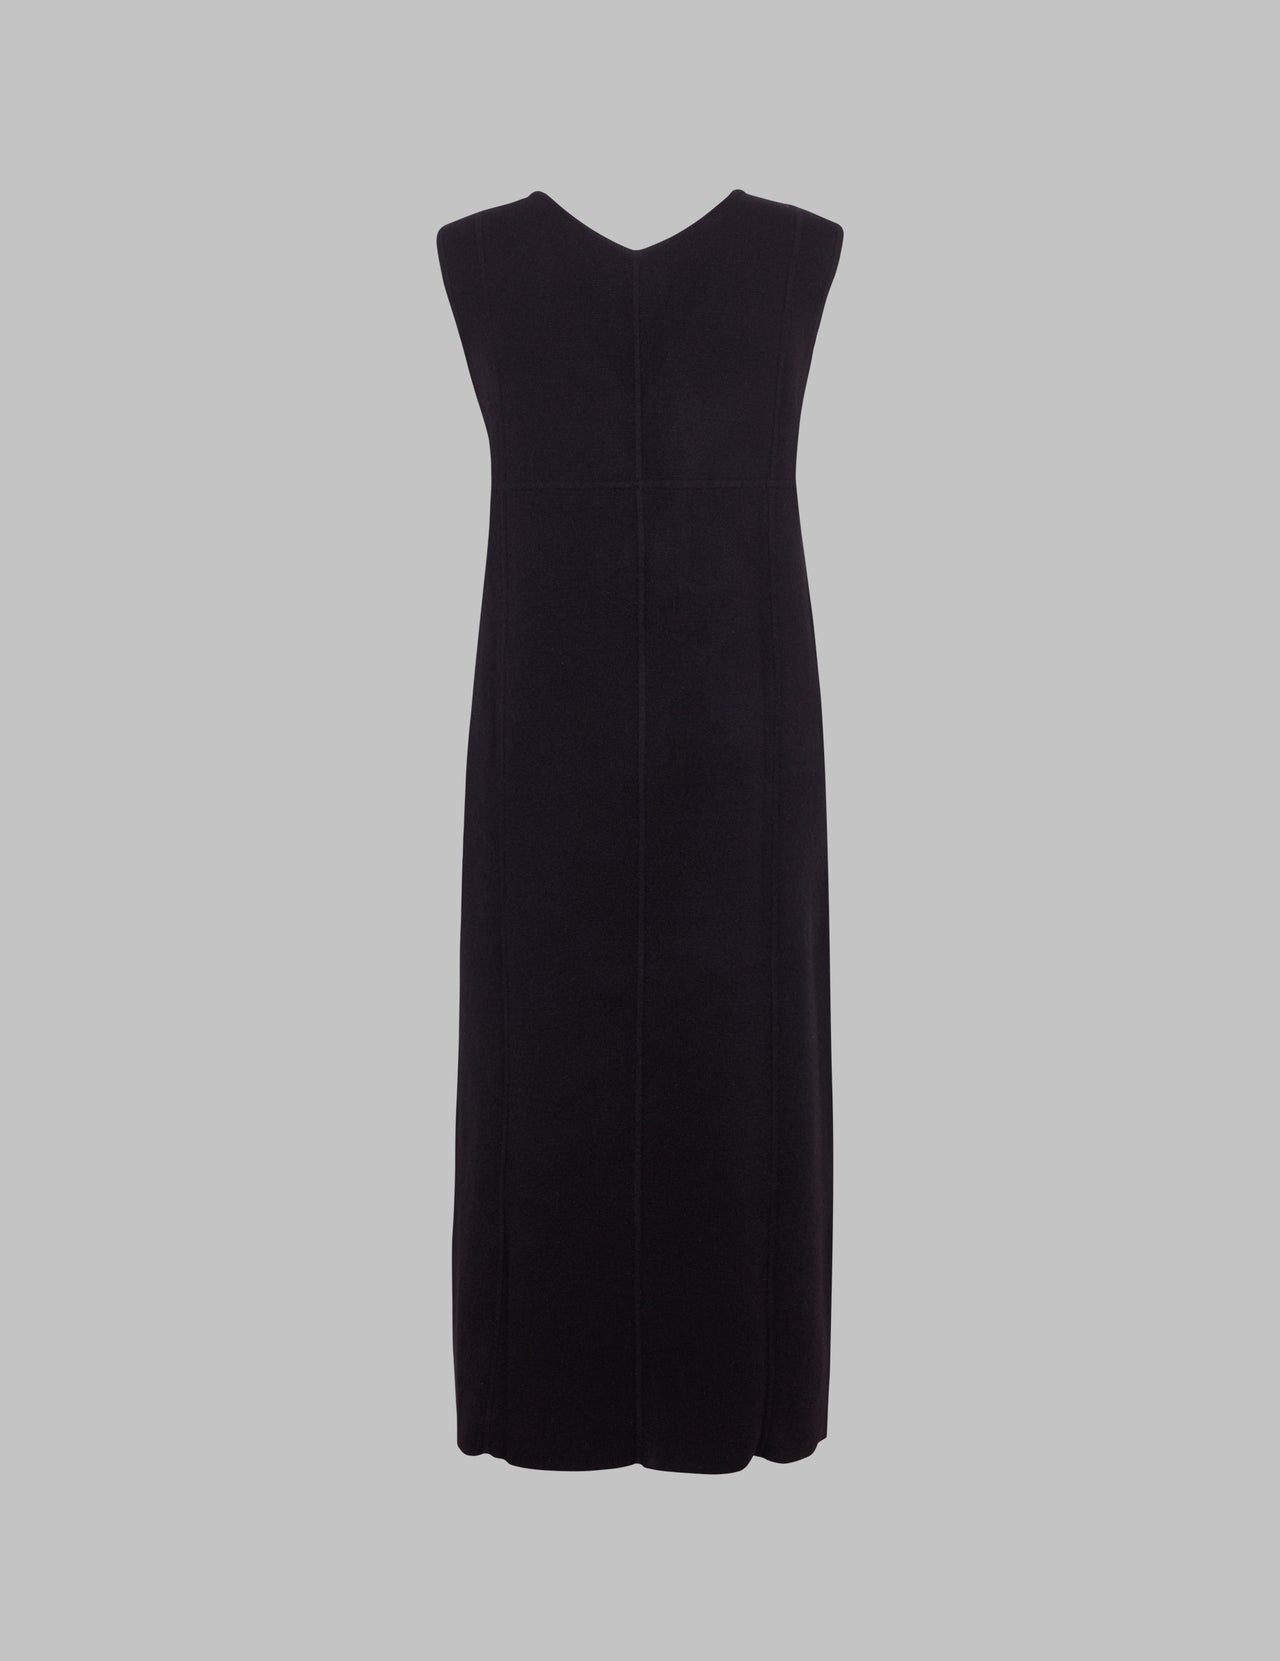  Black Cashmere Sleeveless V-Neck Dress 